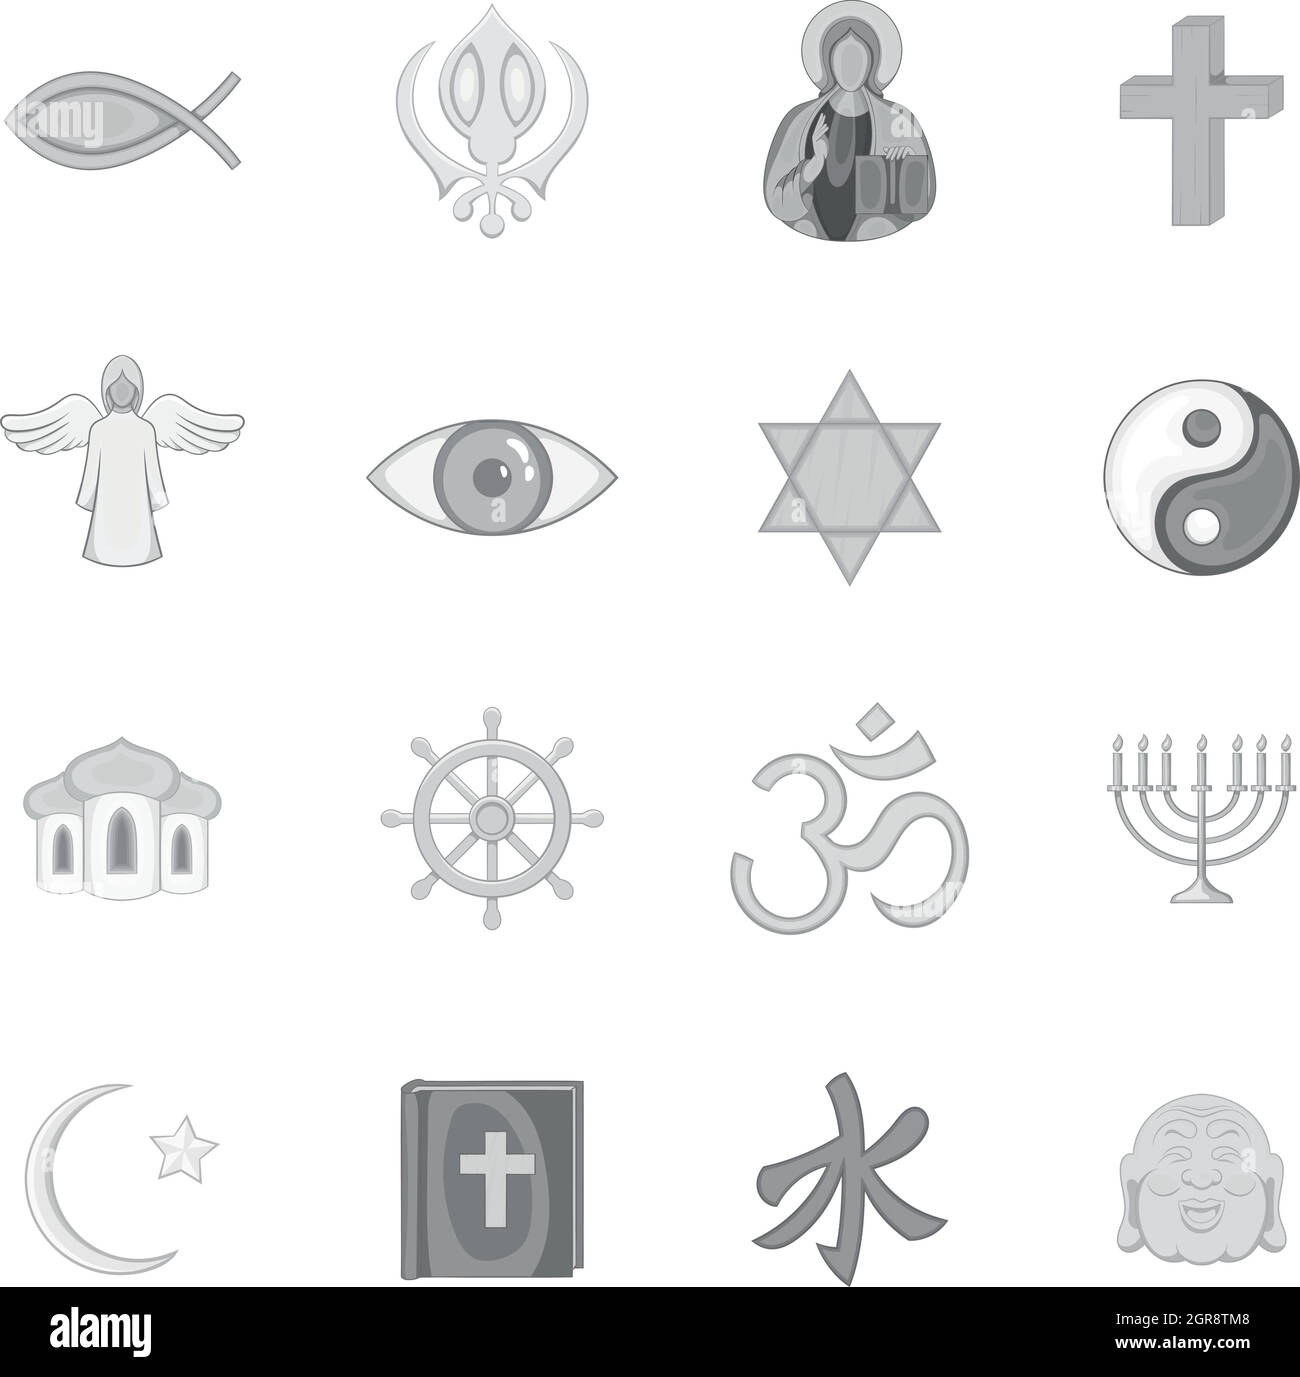 Religion symbols icons set Stock Vector